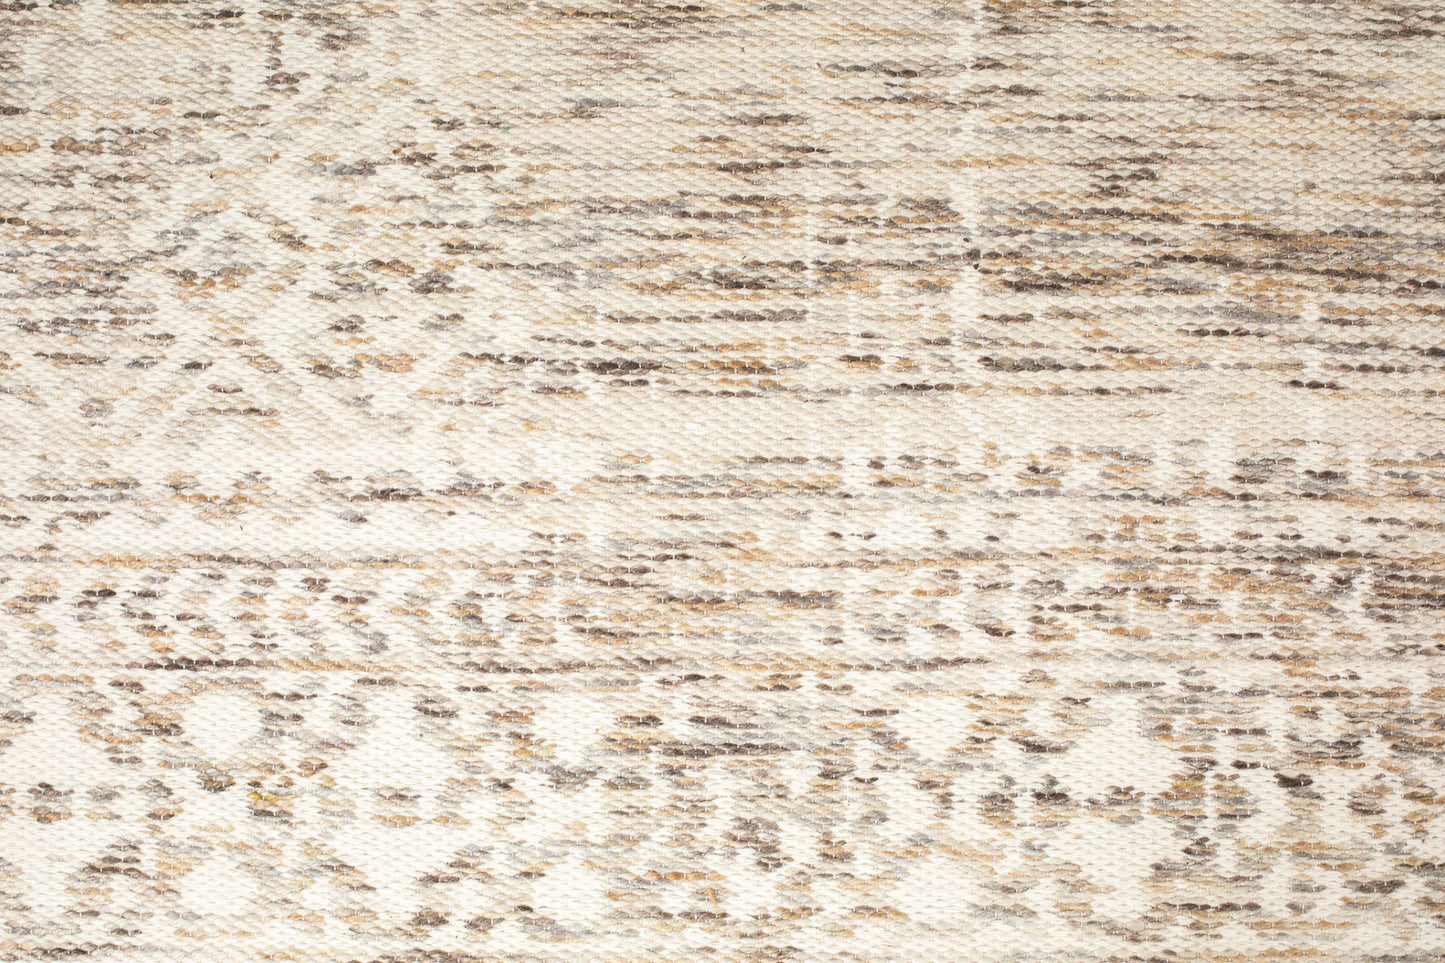 Nancy's DeForest Carpet - Classic - Taupe - Wool, Polyester, Cotton - 200 cm x 300 cm x cm